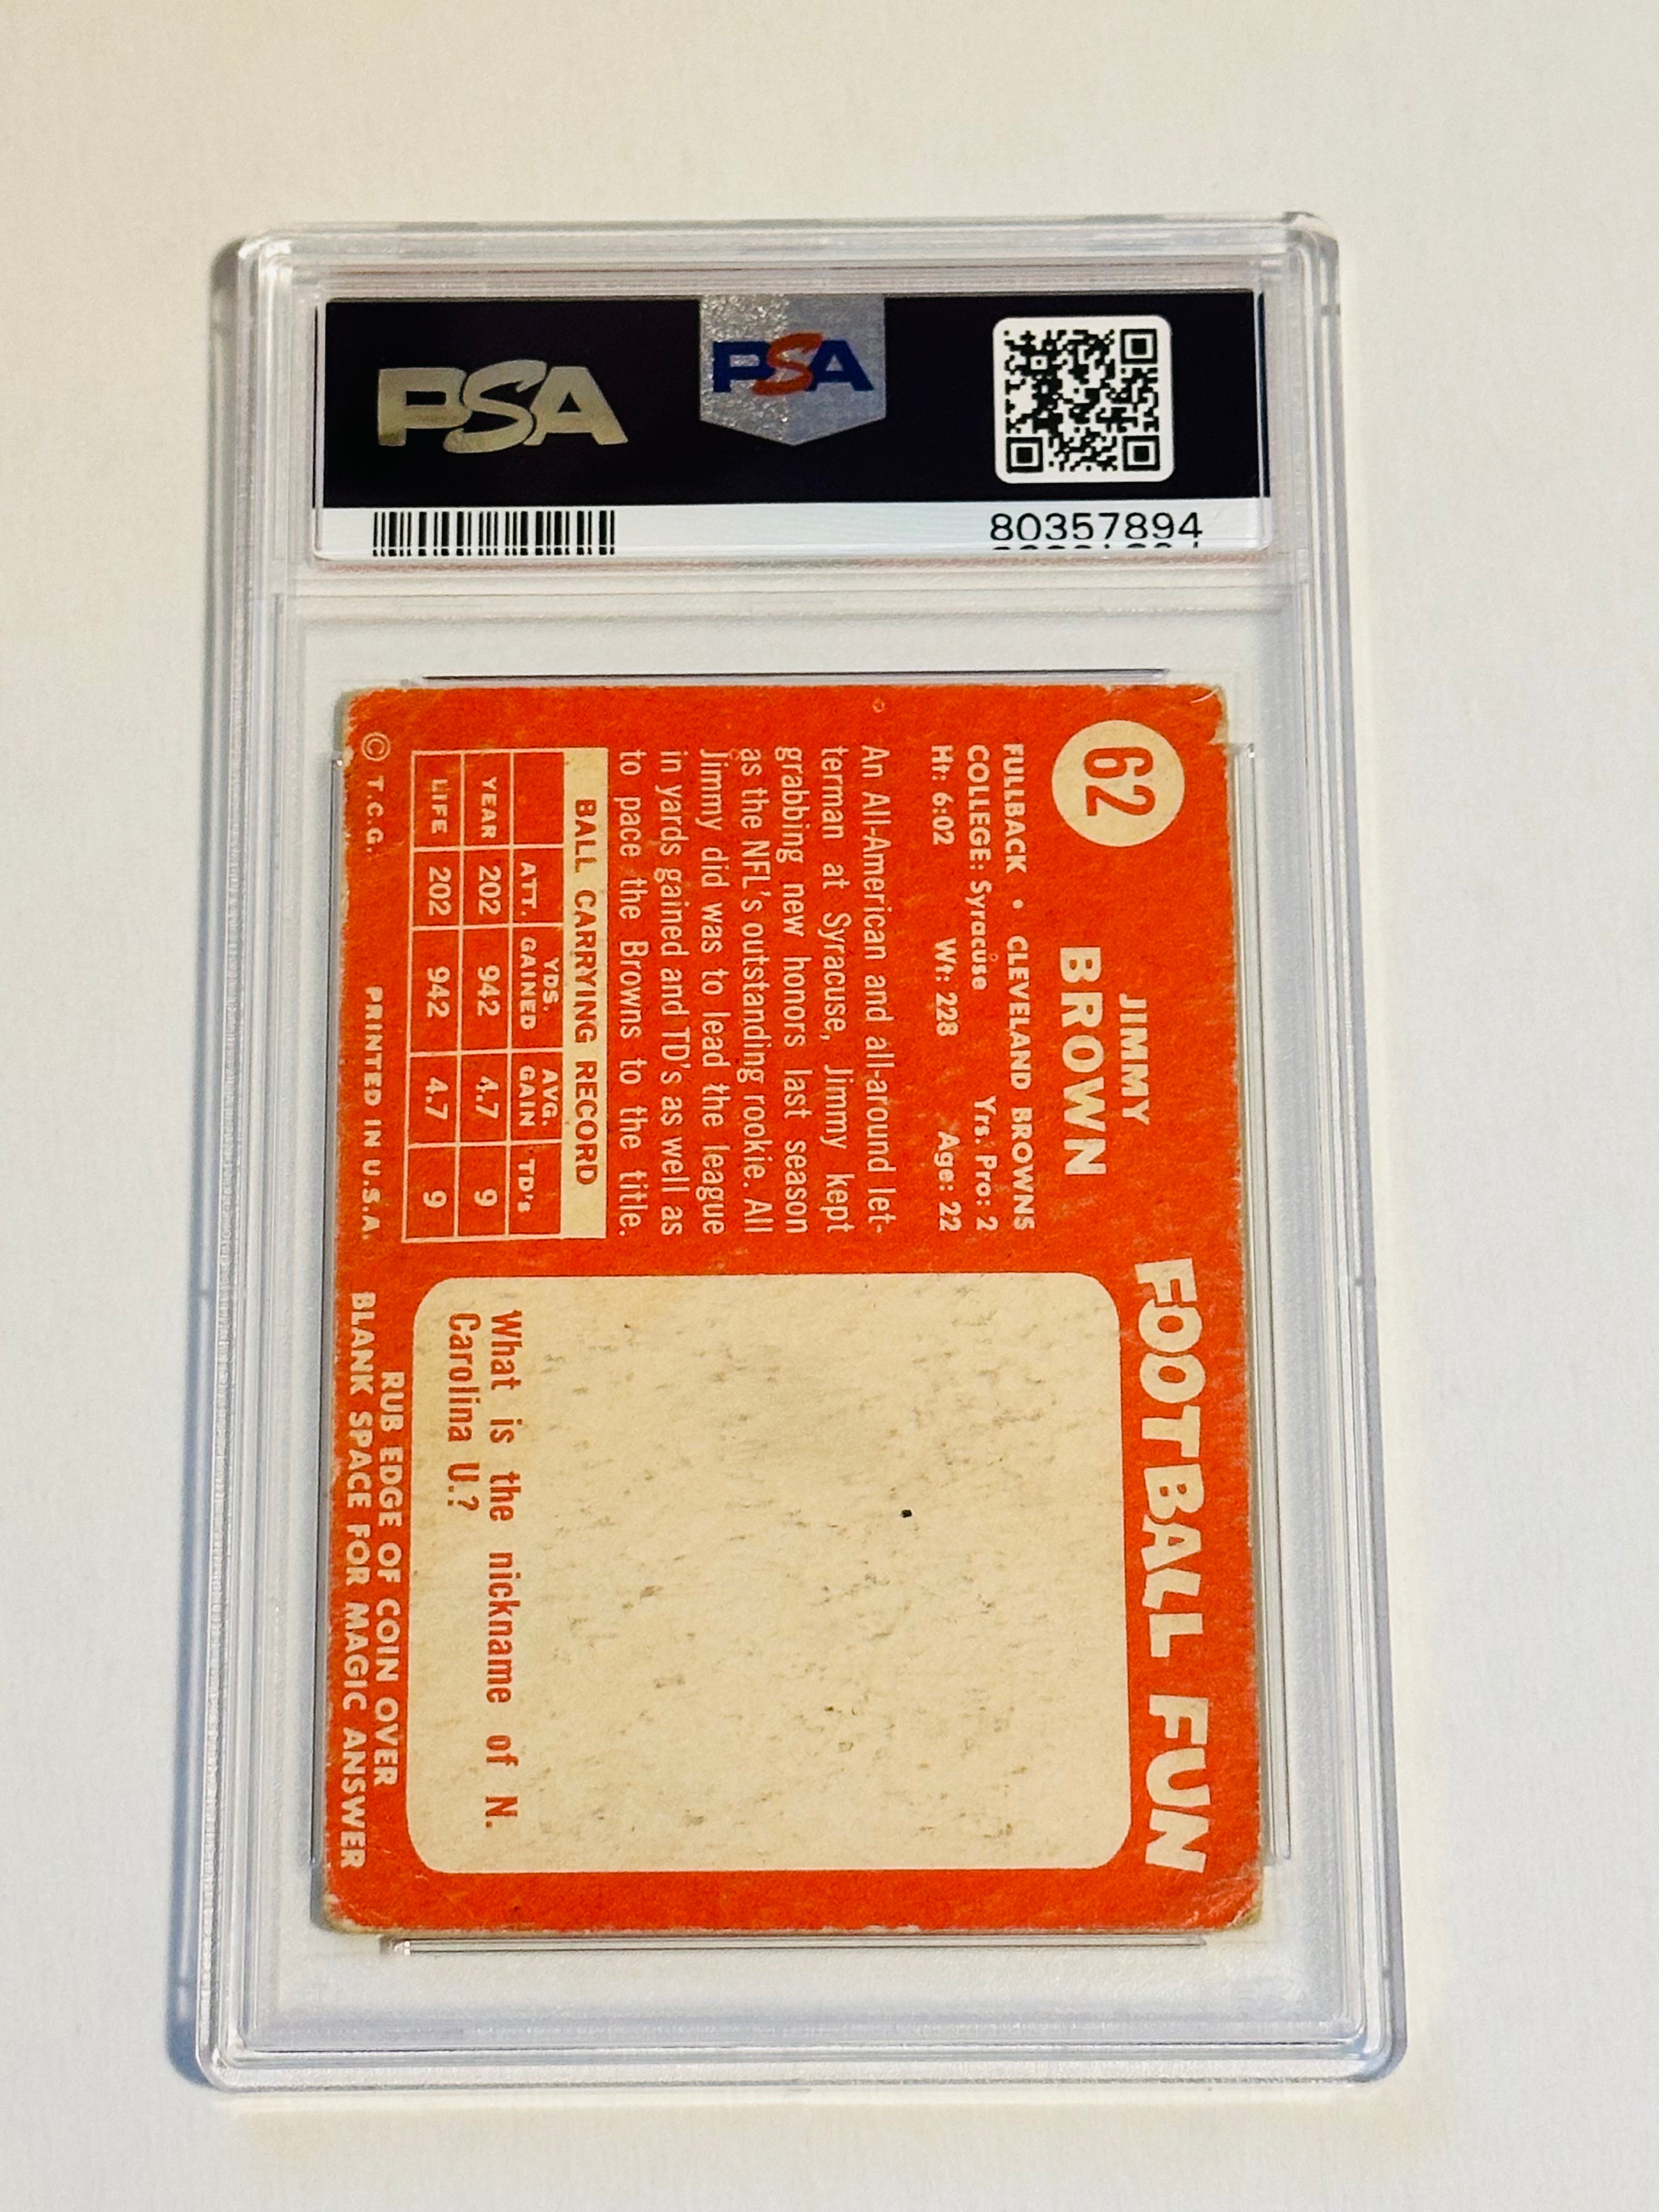 Jim Brown NFL football legend rare rookie PSA 1 graded card 1958